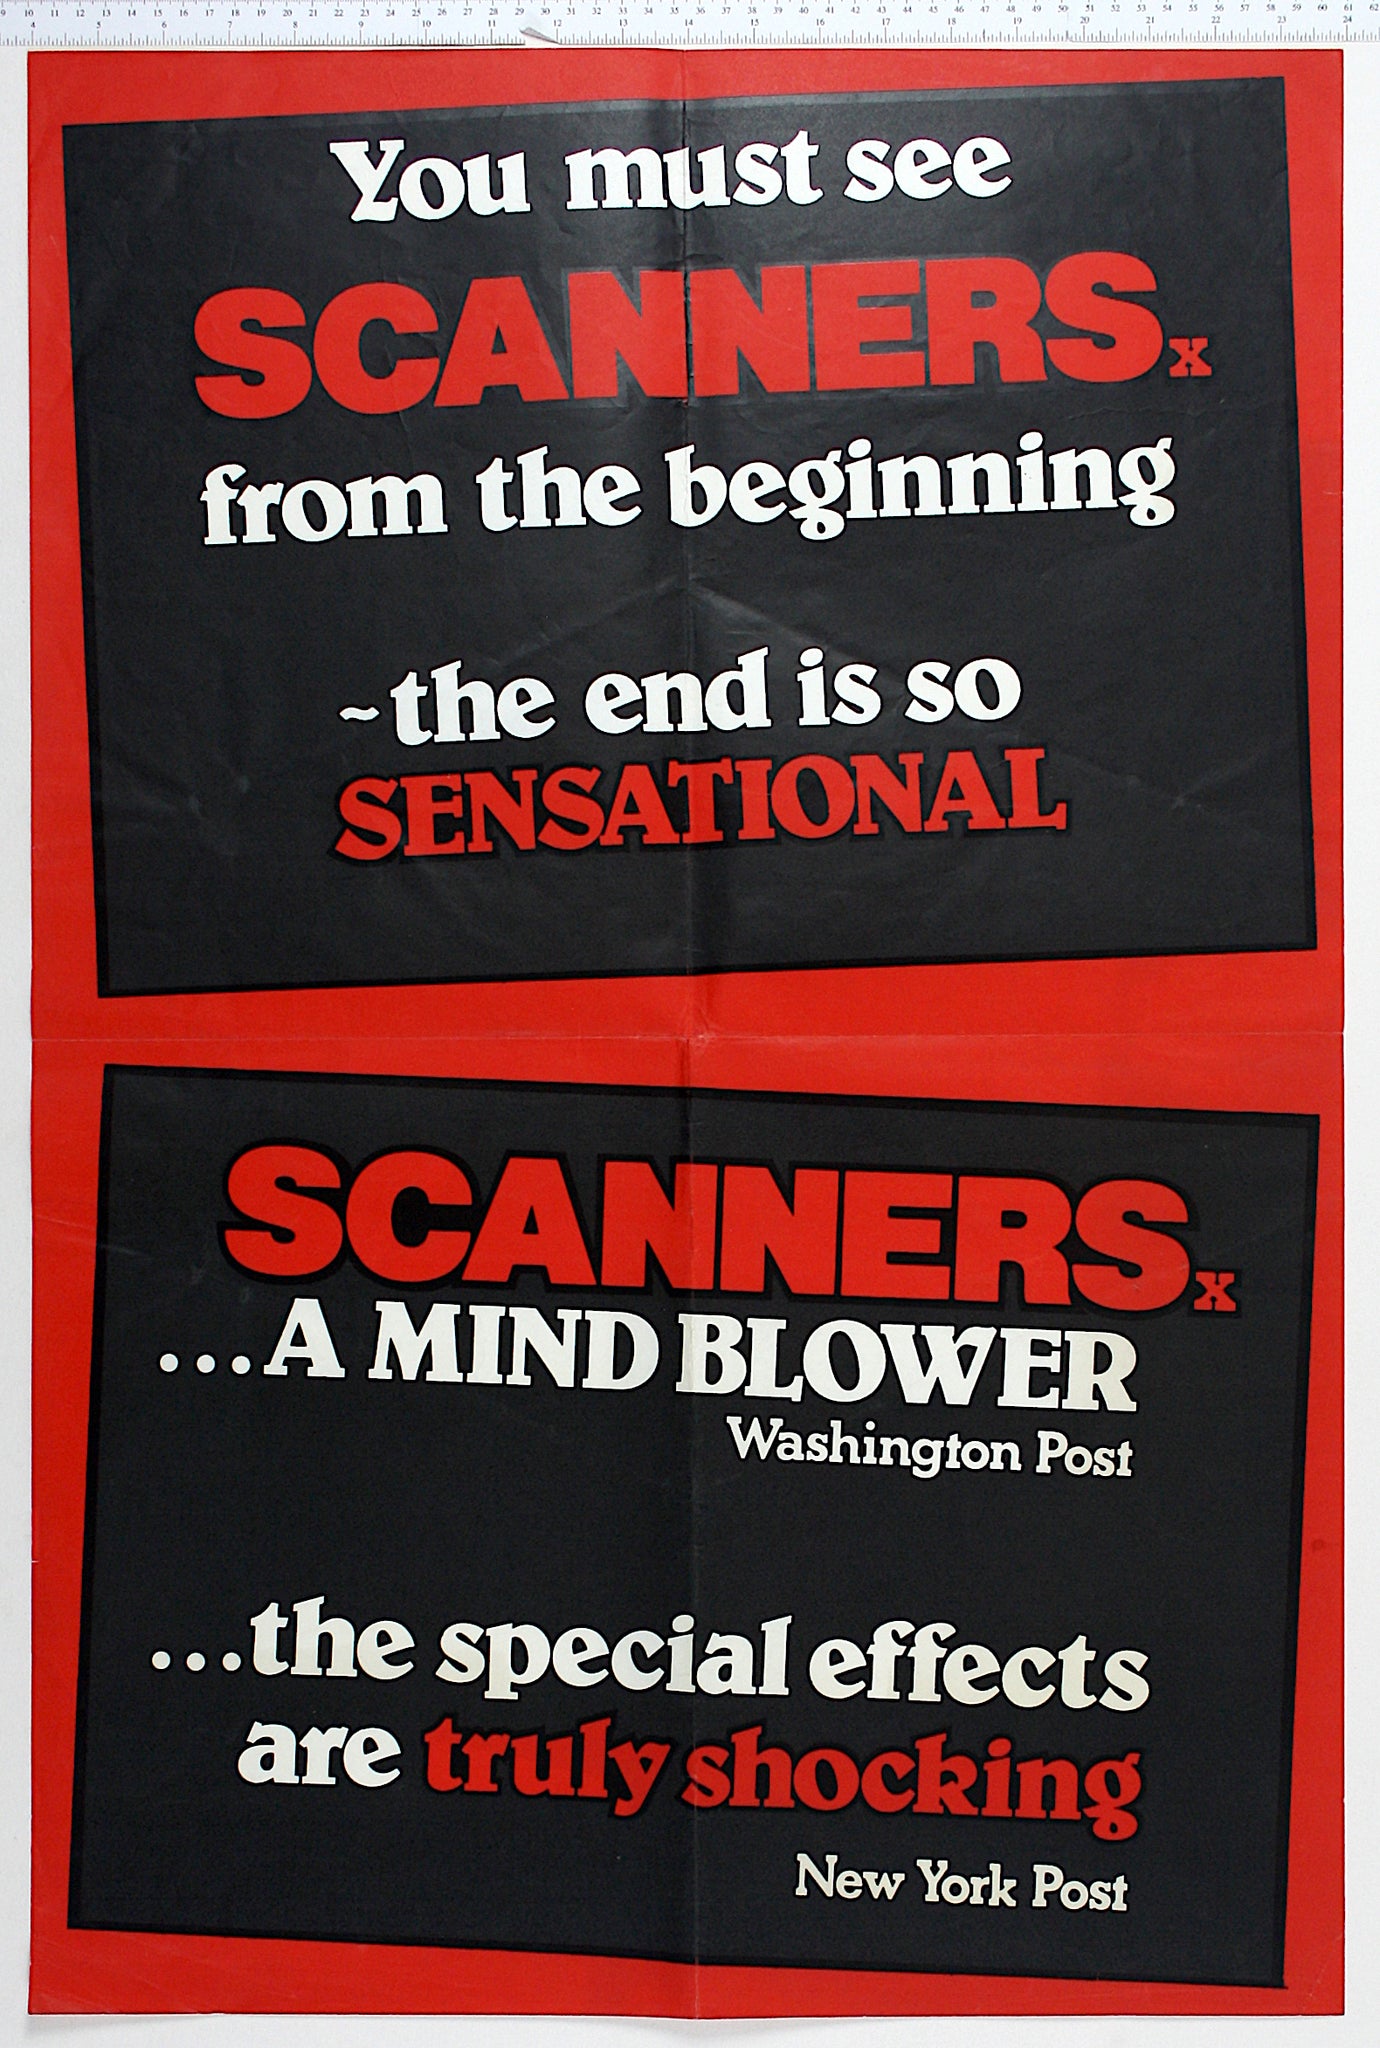 Scanners (1981) UK Double Crown Poster II